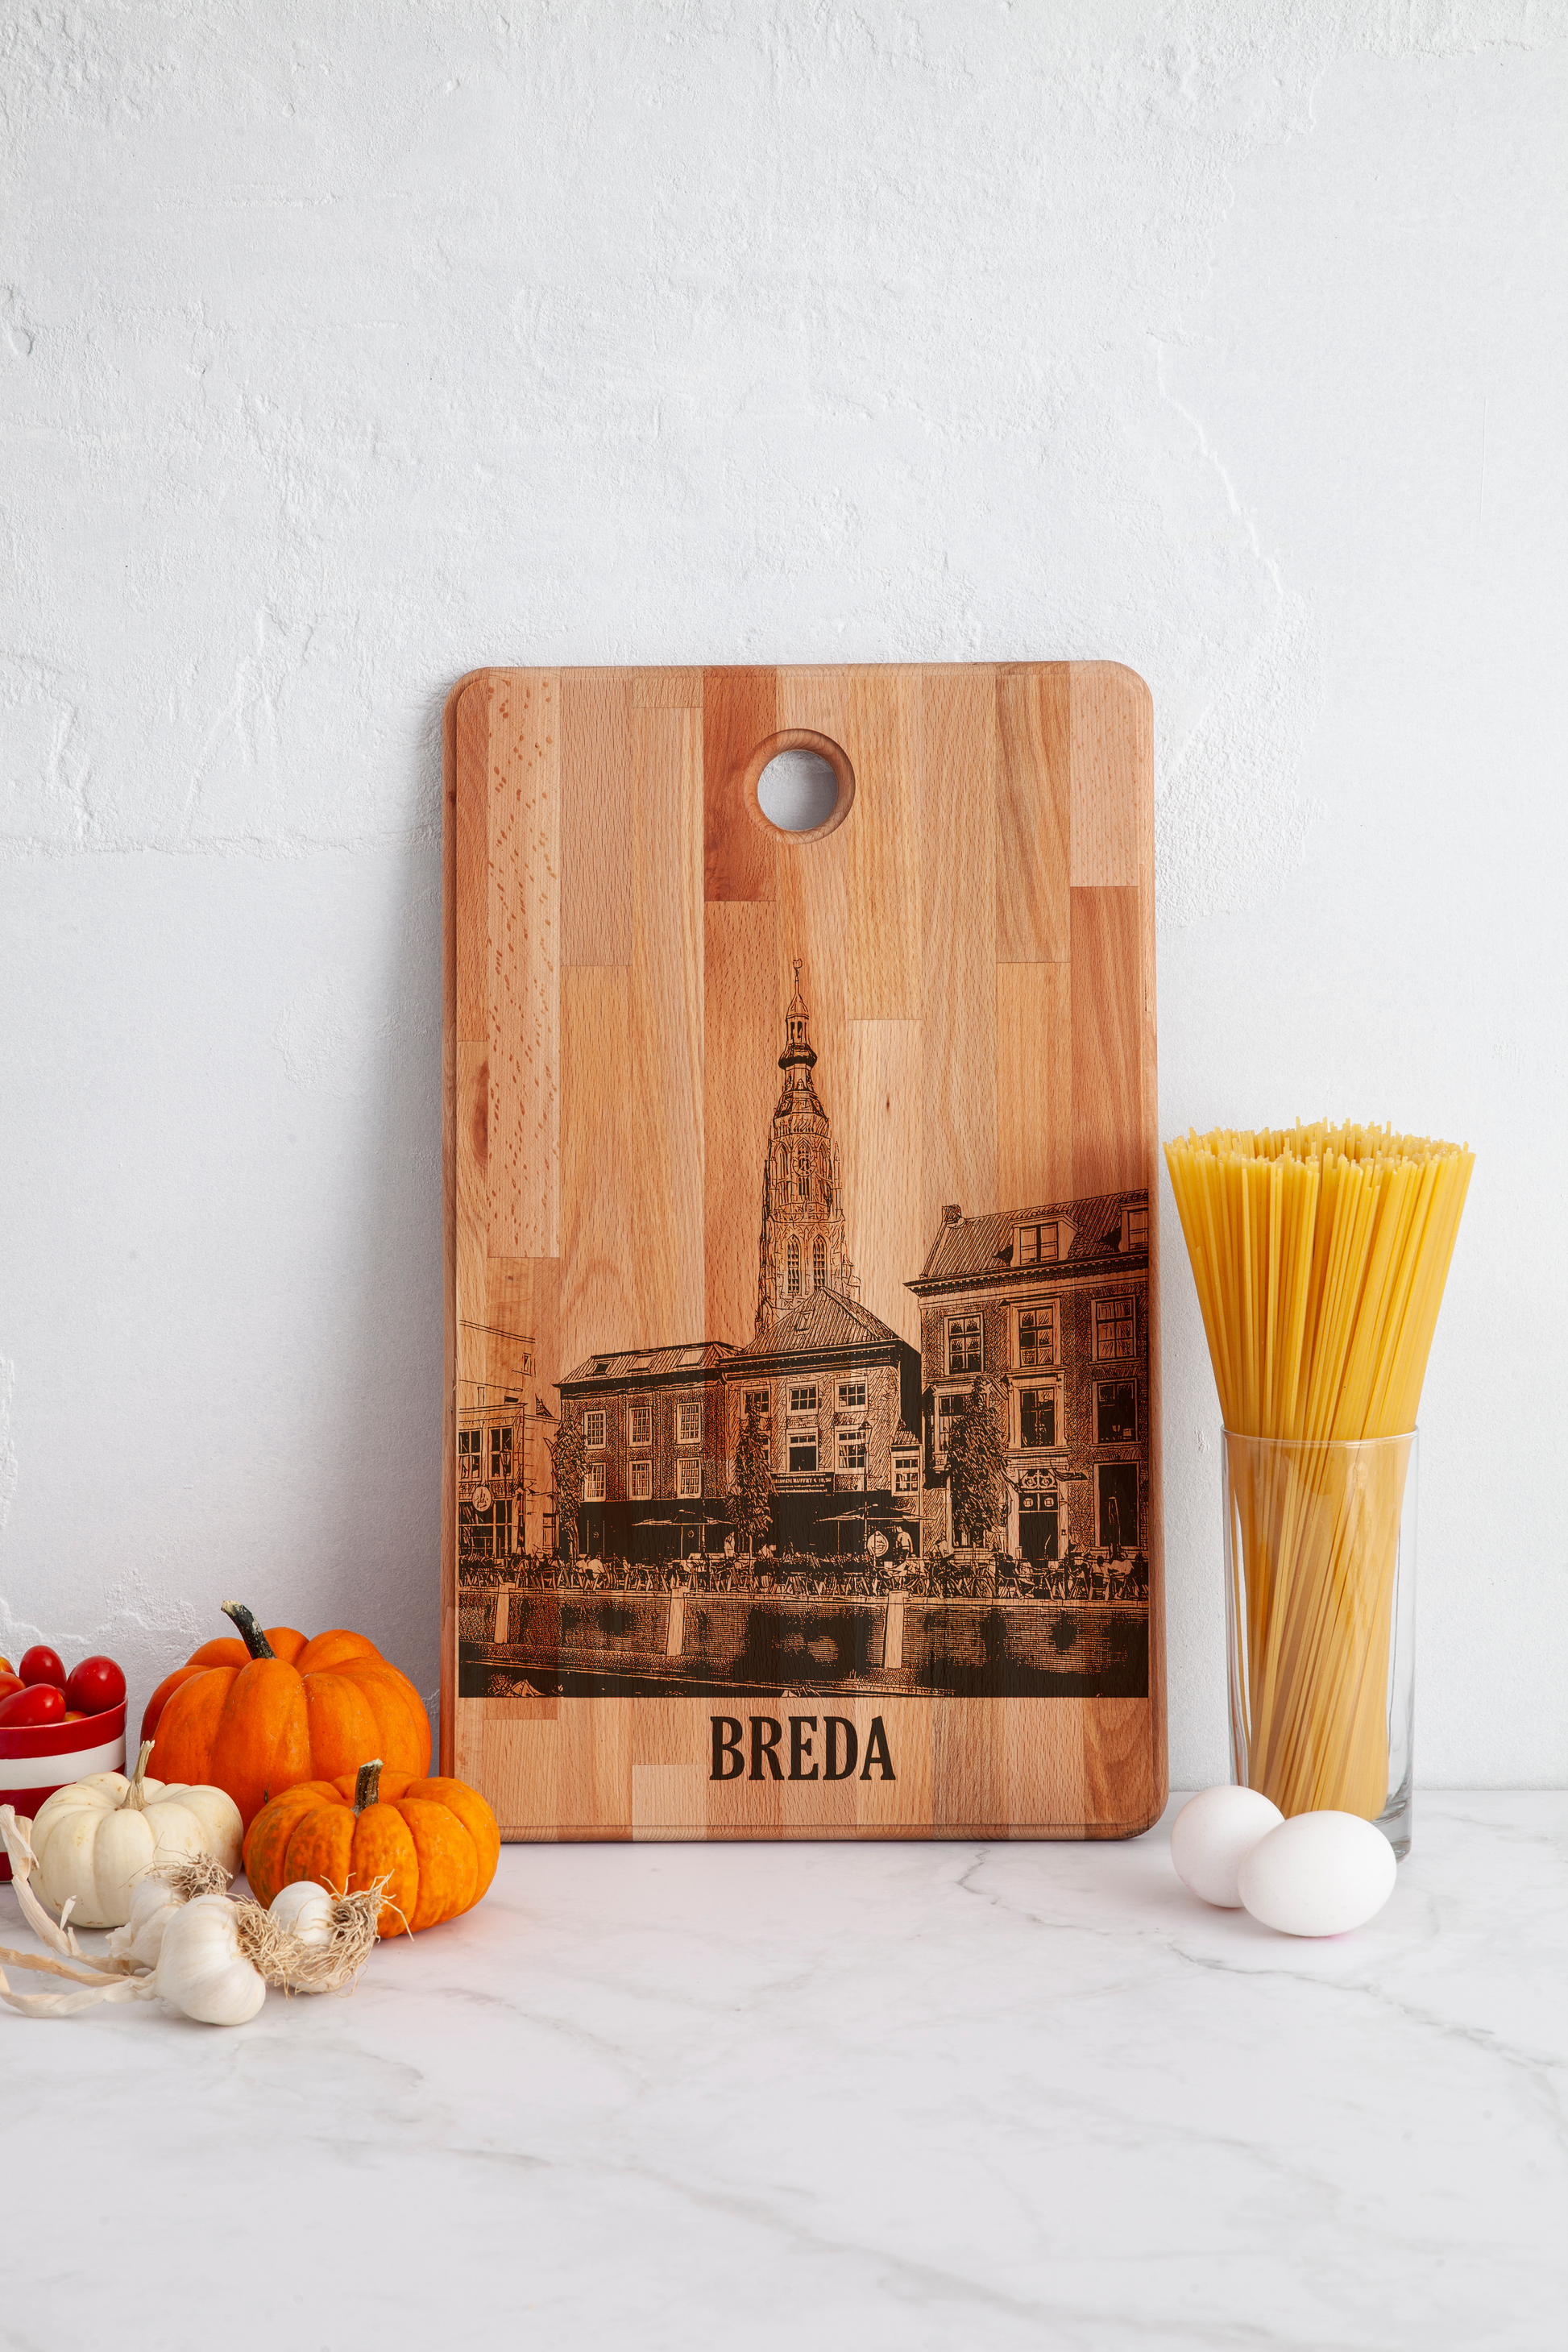 Breda, Grote Kerk, cutting board, in kitchen